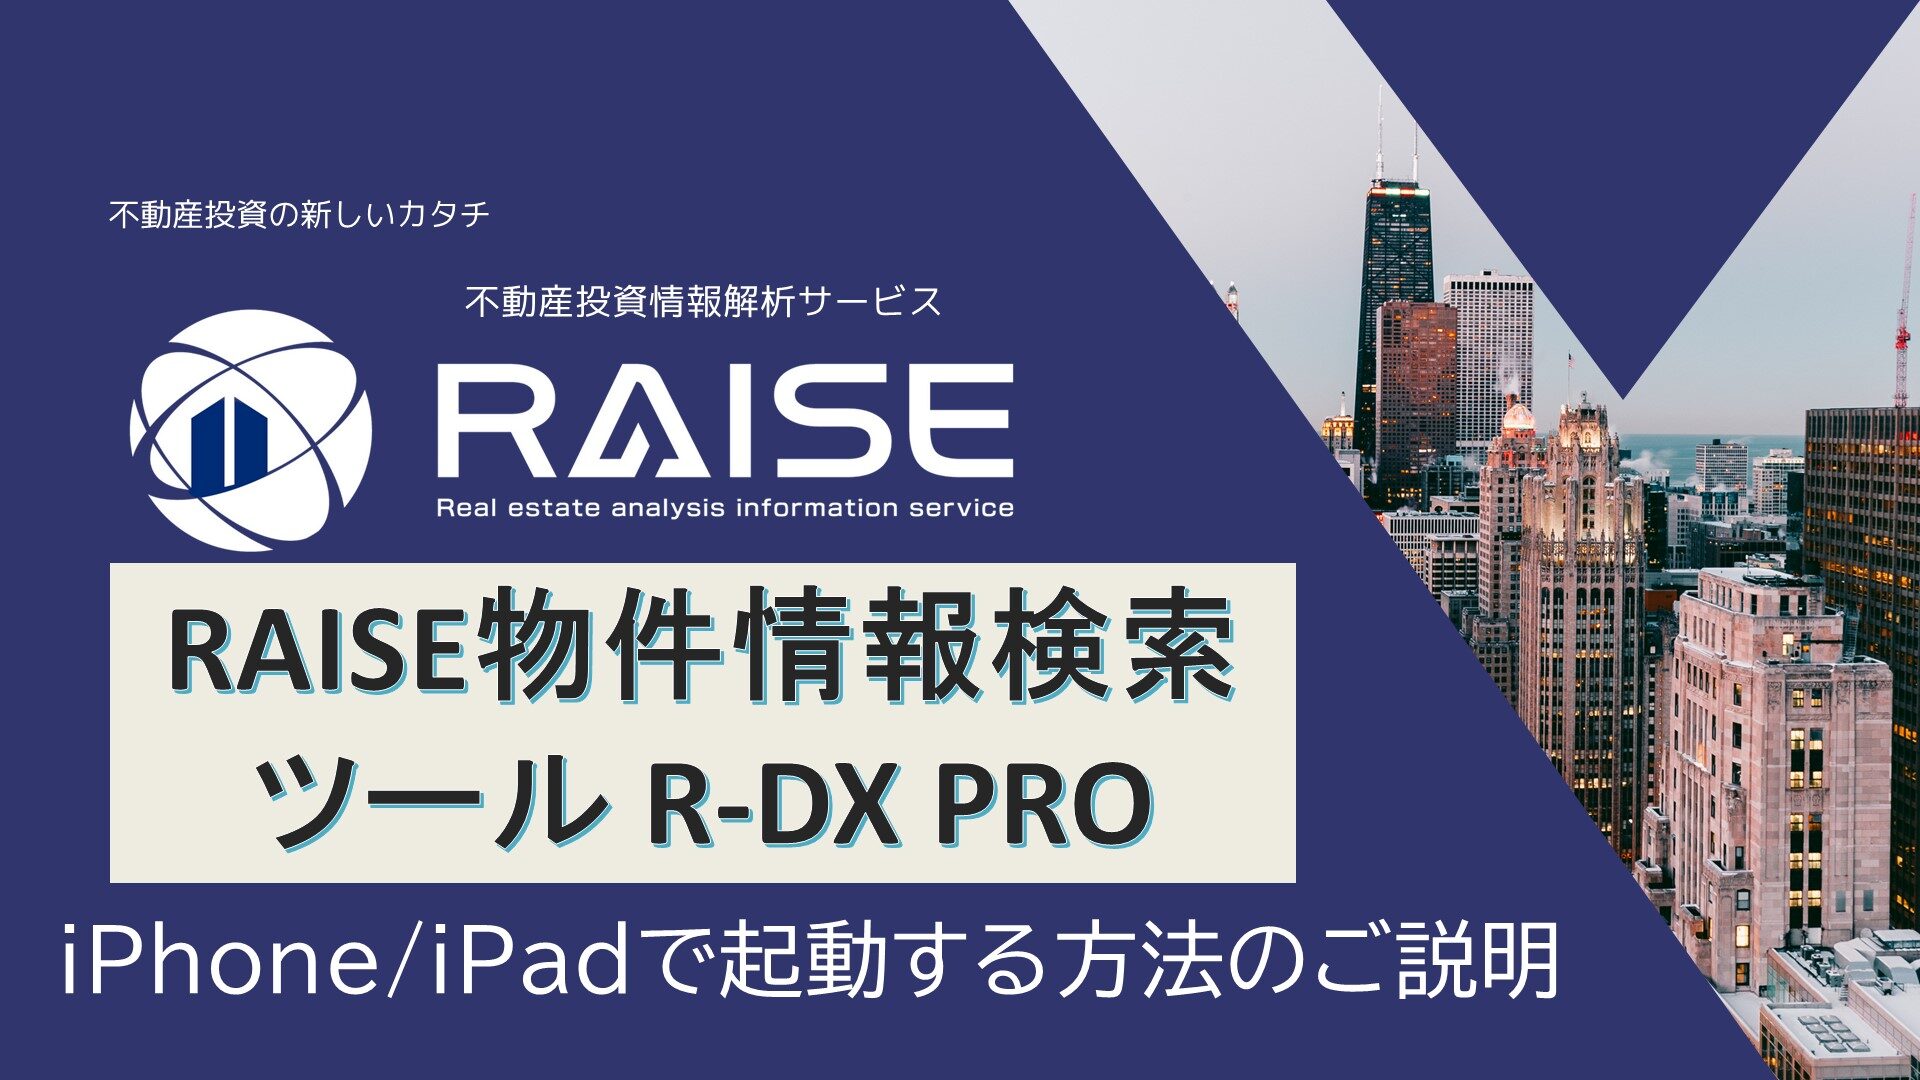 R-DX PRO iPhone/iPadで起動する方法